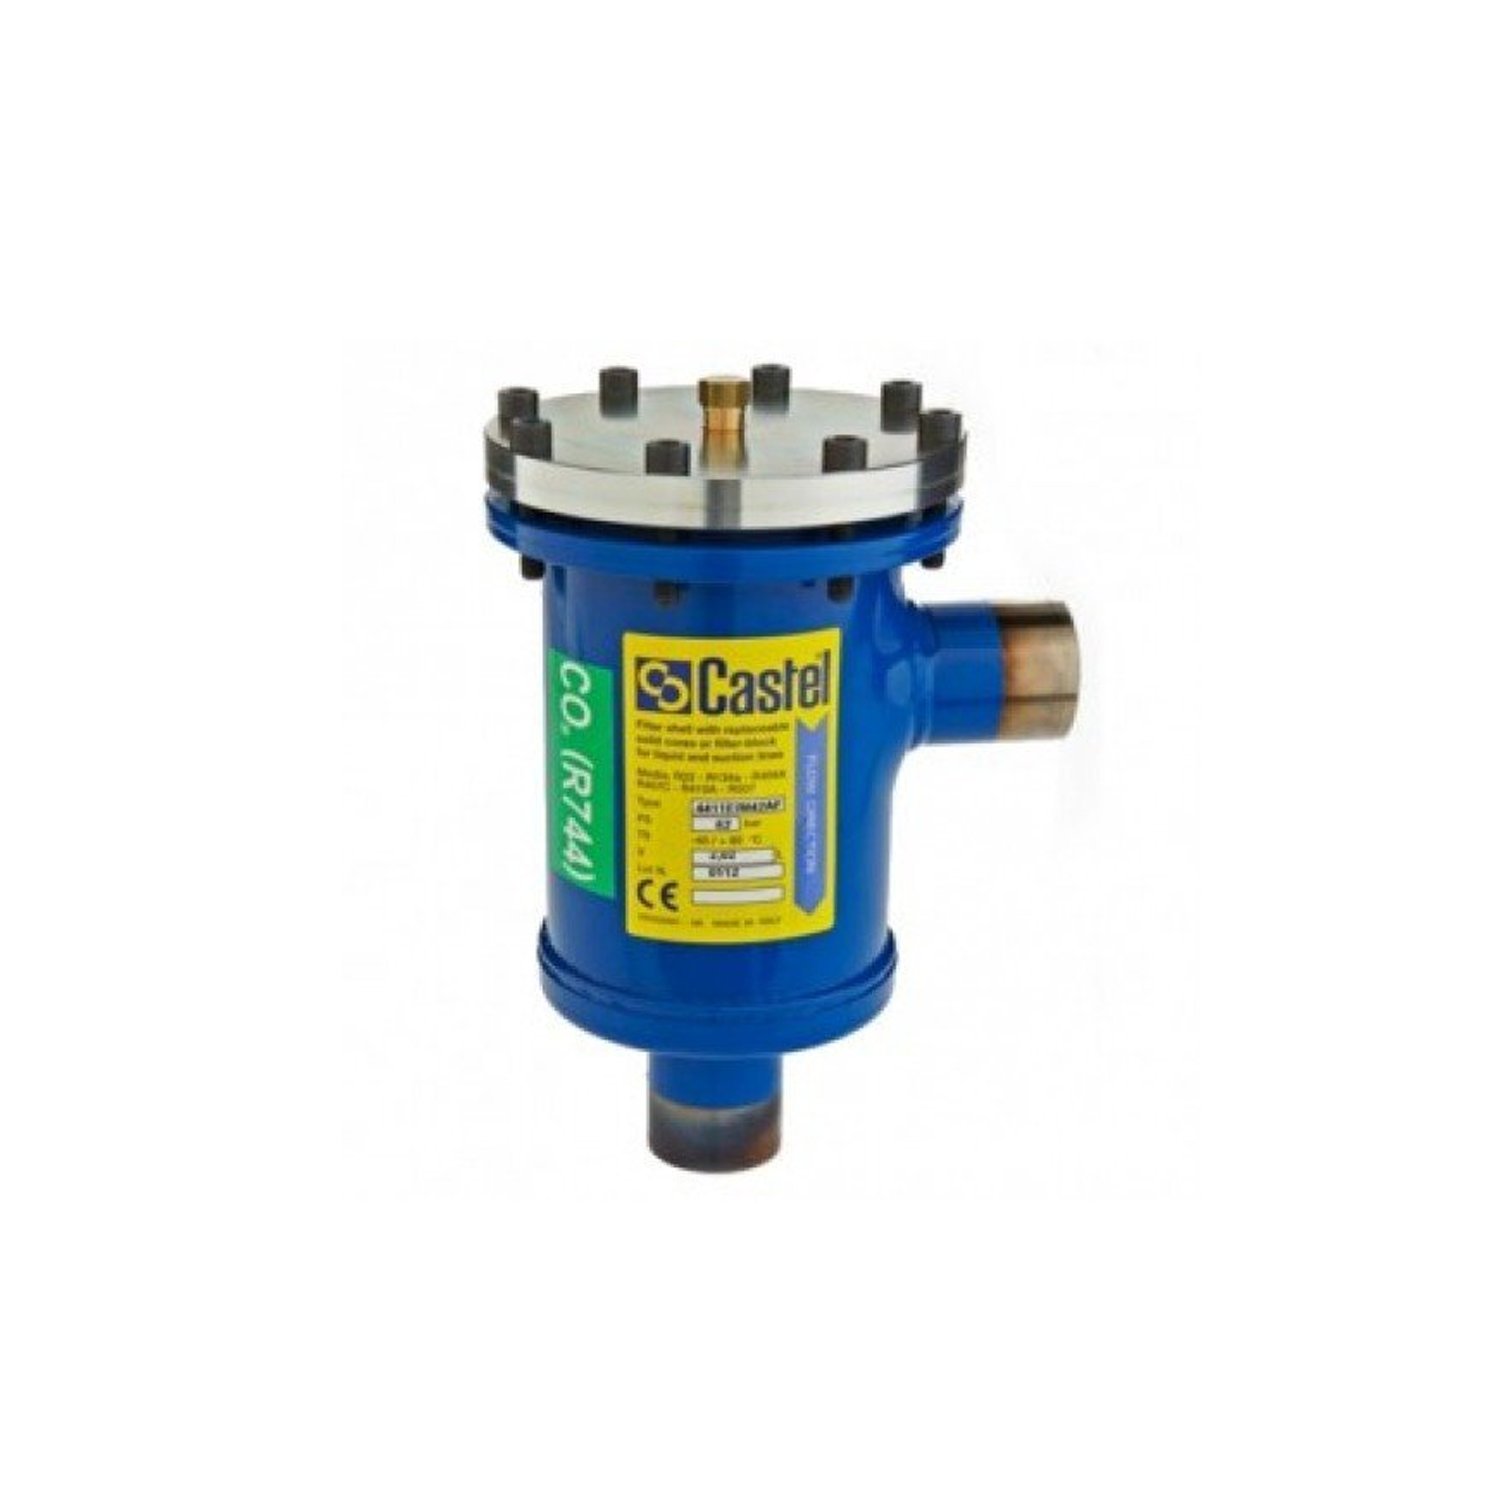 Filter dryer CASTEL 4411/M28A 44-1, 008308